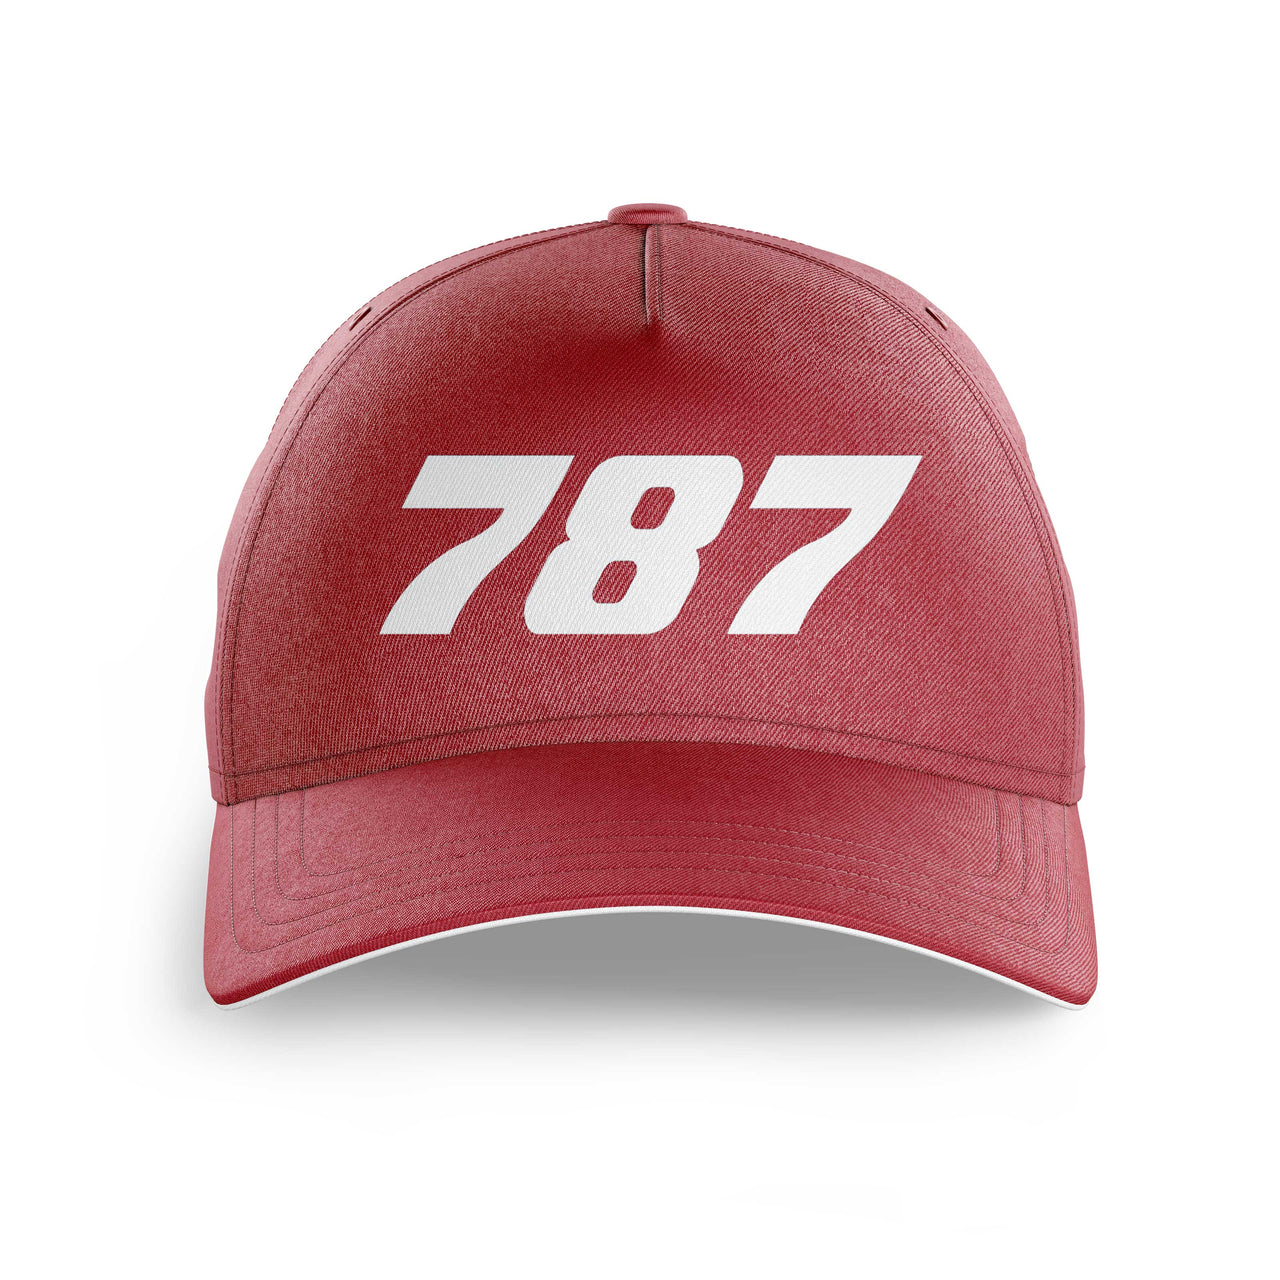 787 Flat Text Printed Hats